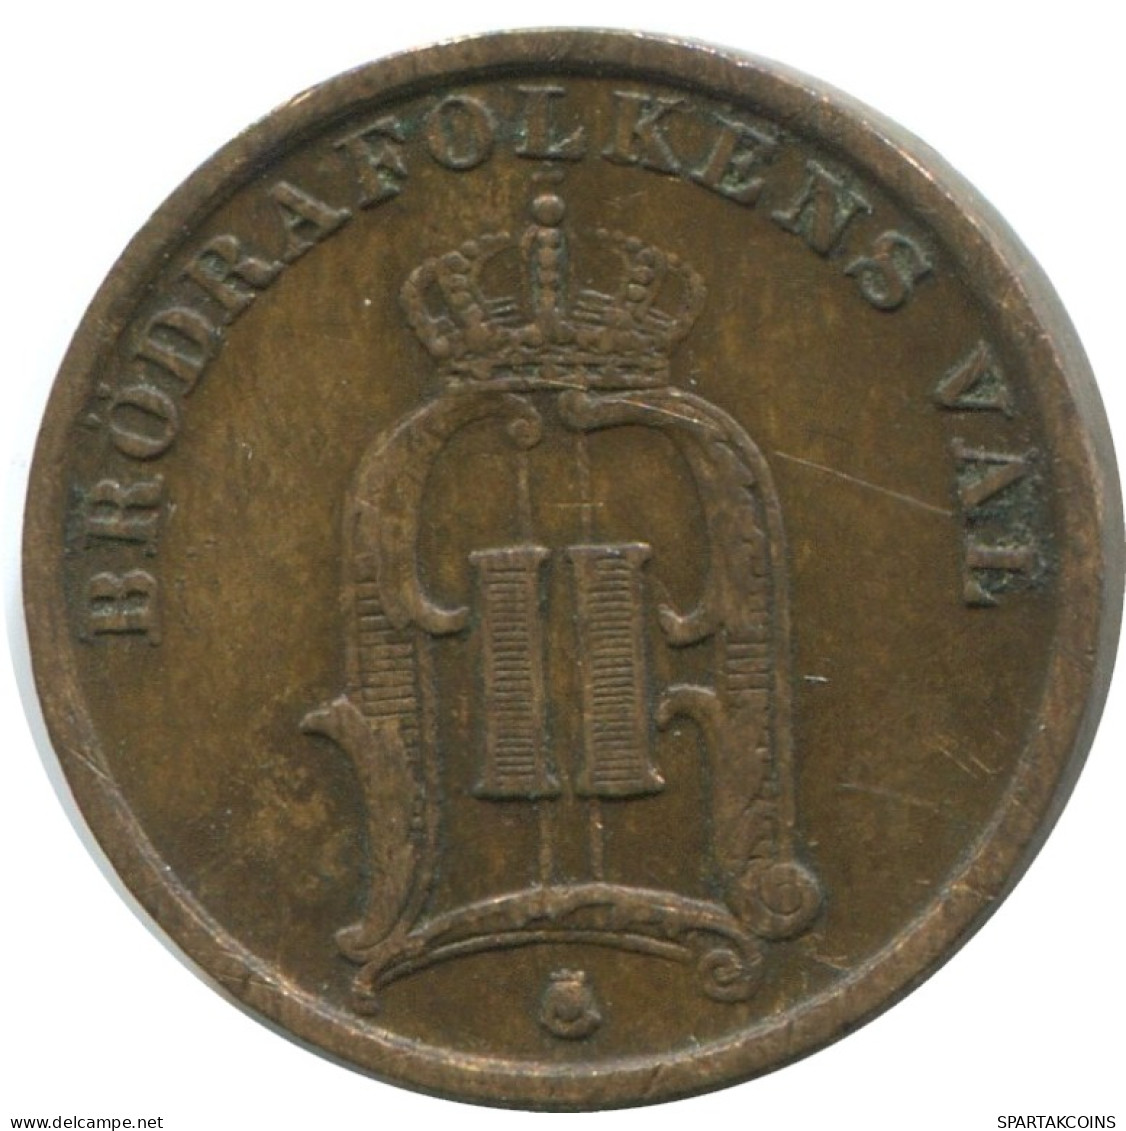 1 ORE 1896 SWEDEN Coin #AD320.2.U.A - Sweden